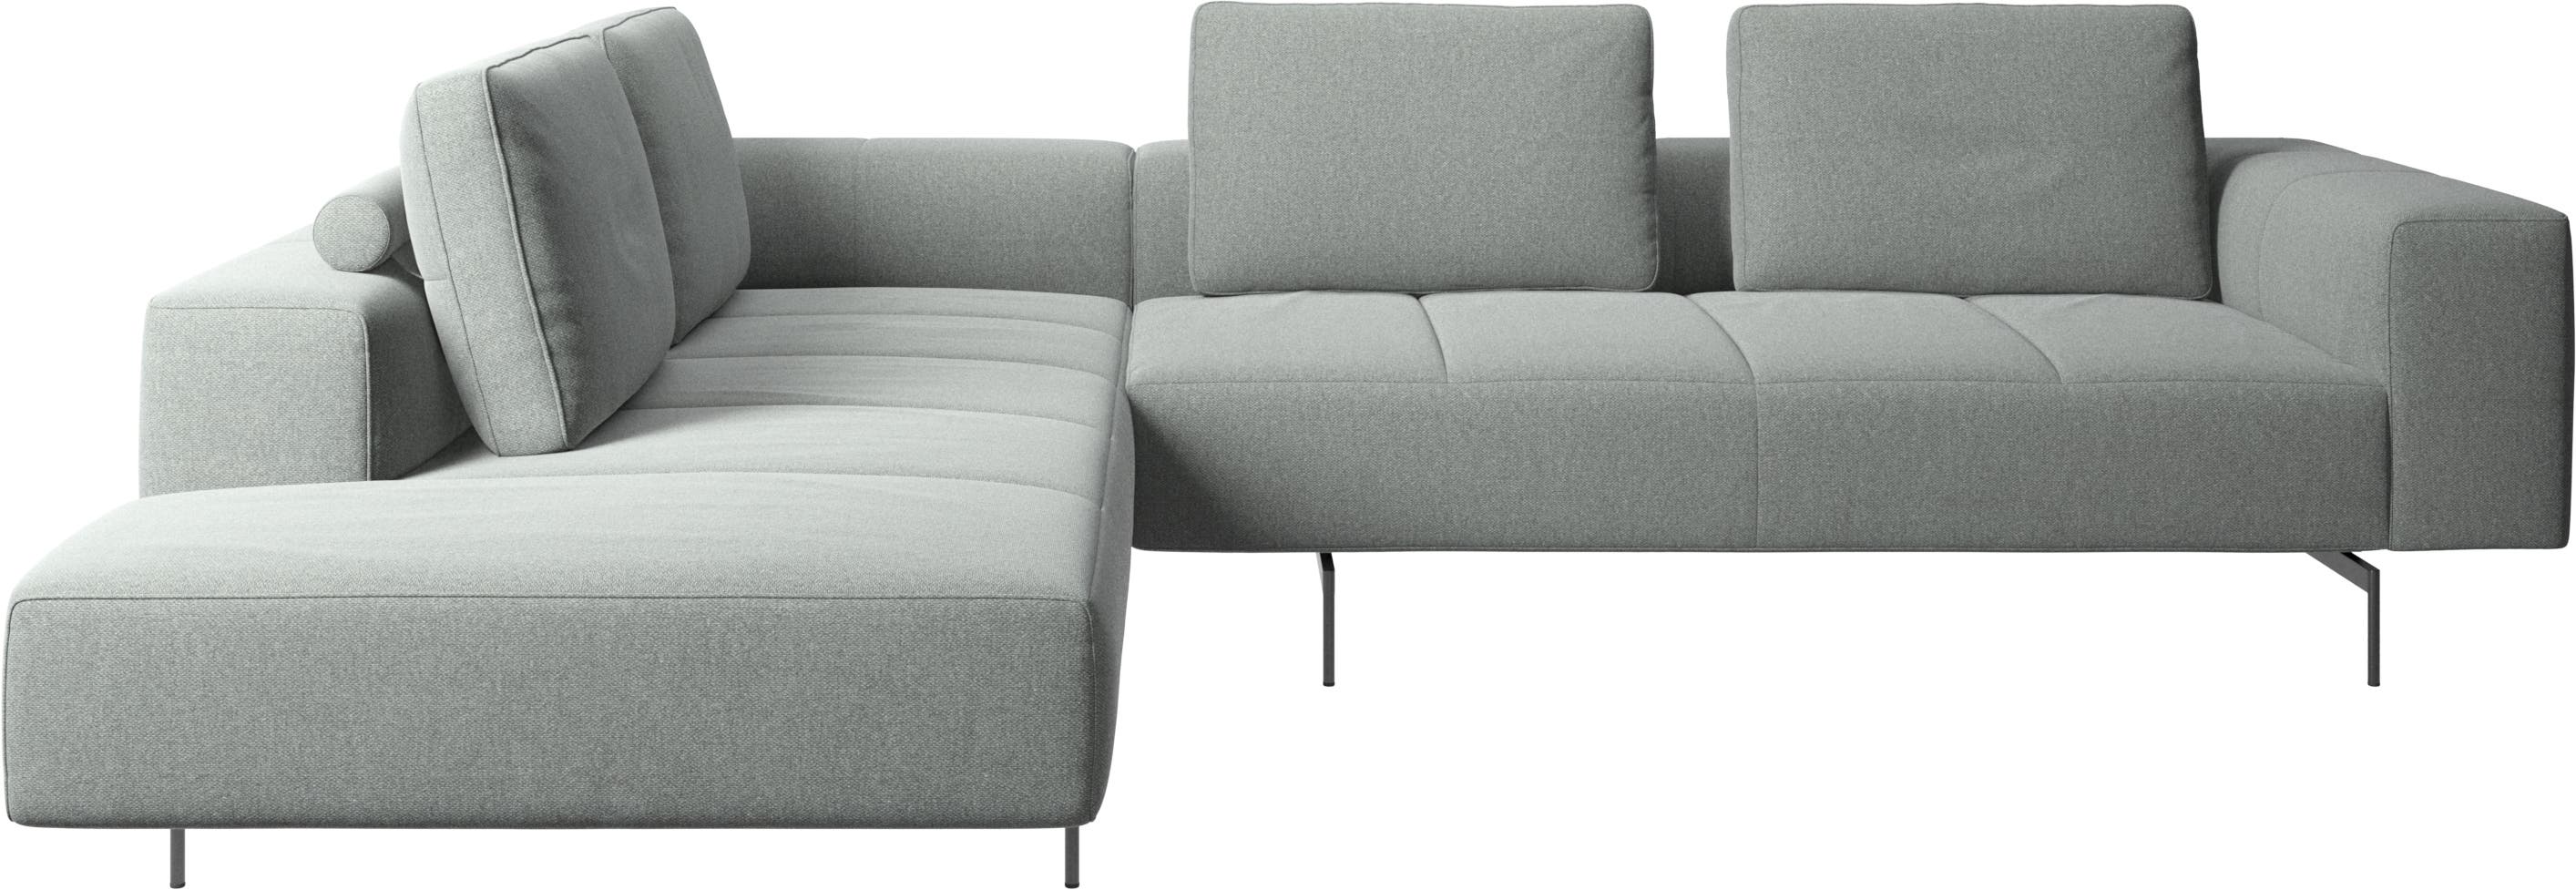 The Amsterdam sofa | Danish furniture design | BoConcept